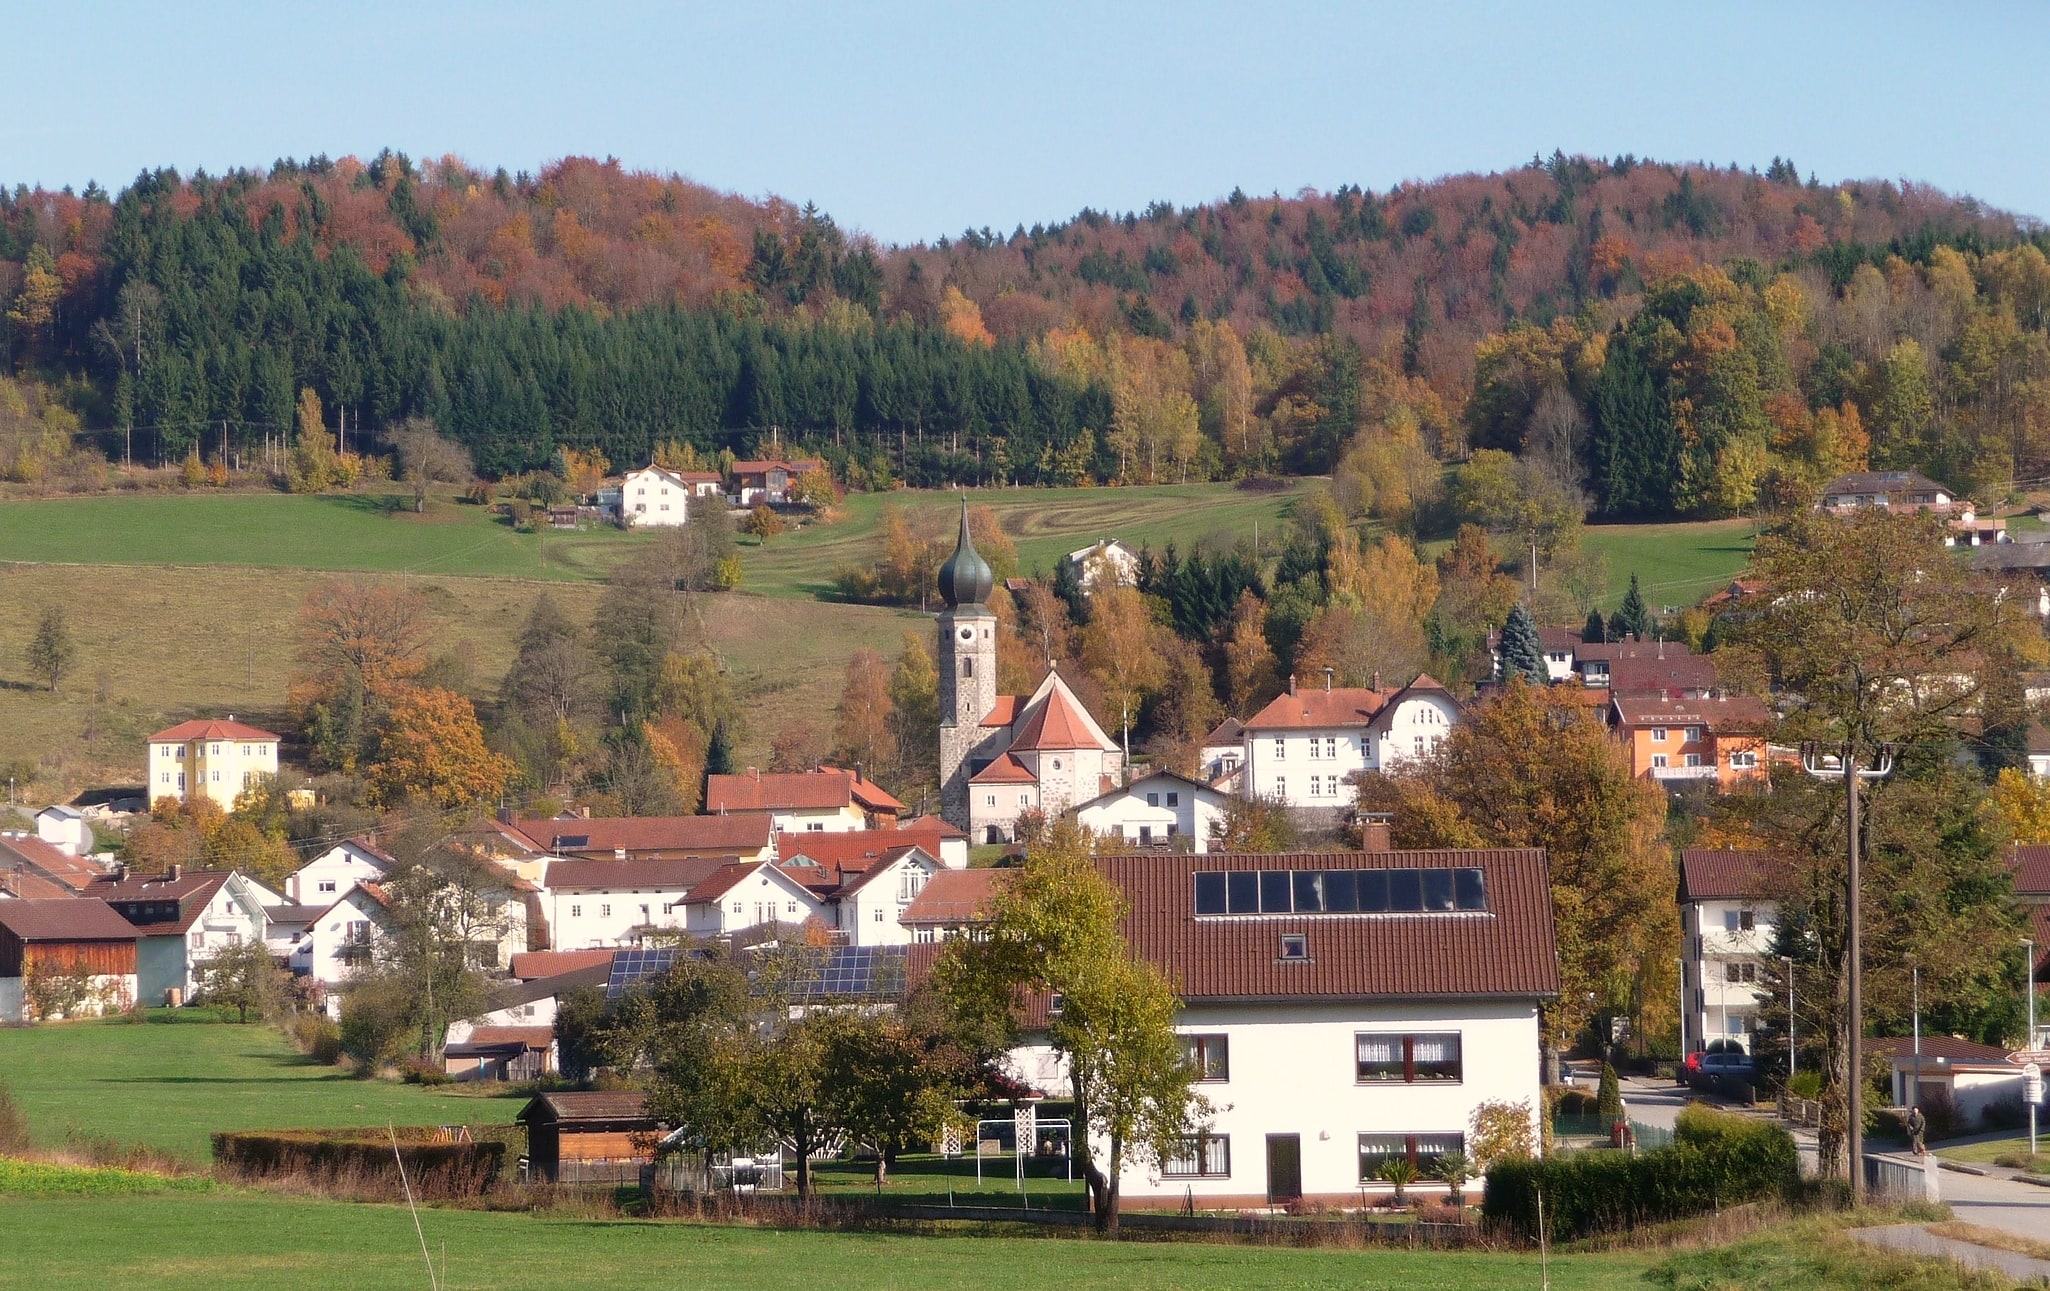 Ringelai, Germany